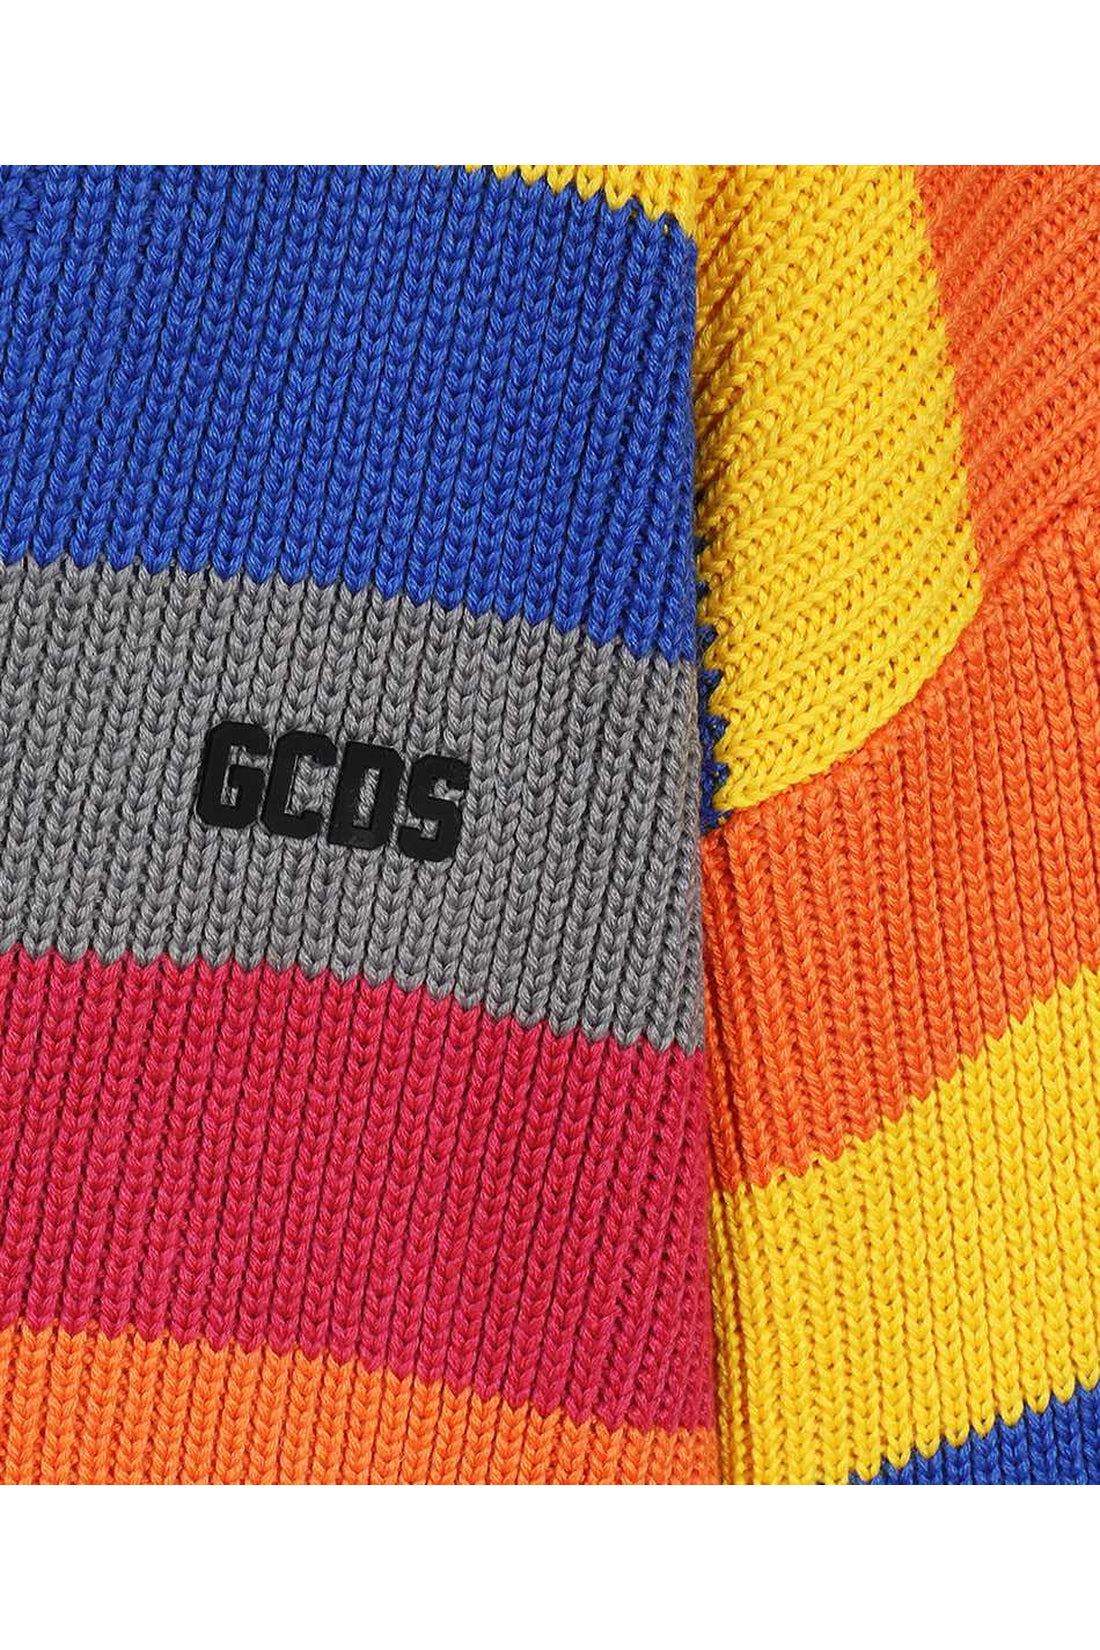 GCDS-OUTLET-SALE-Wool cardigan-ARCHIVIST